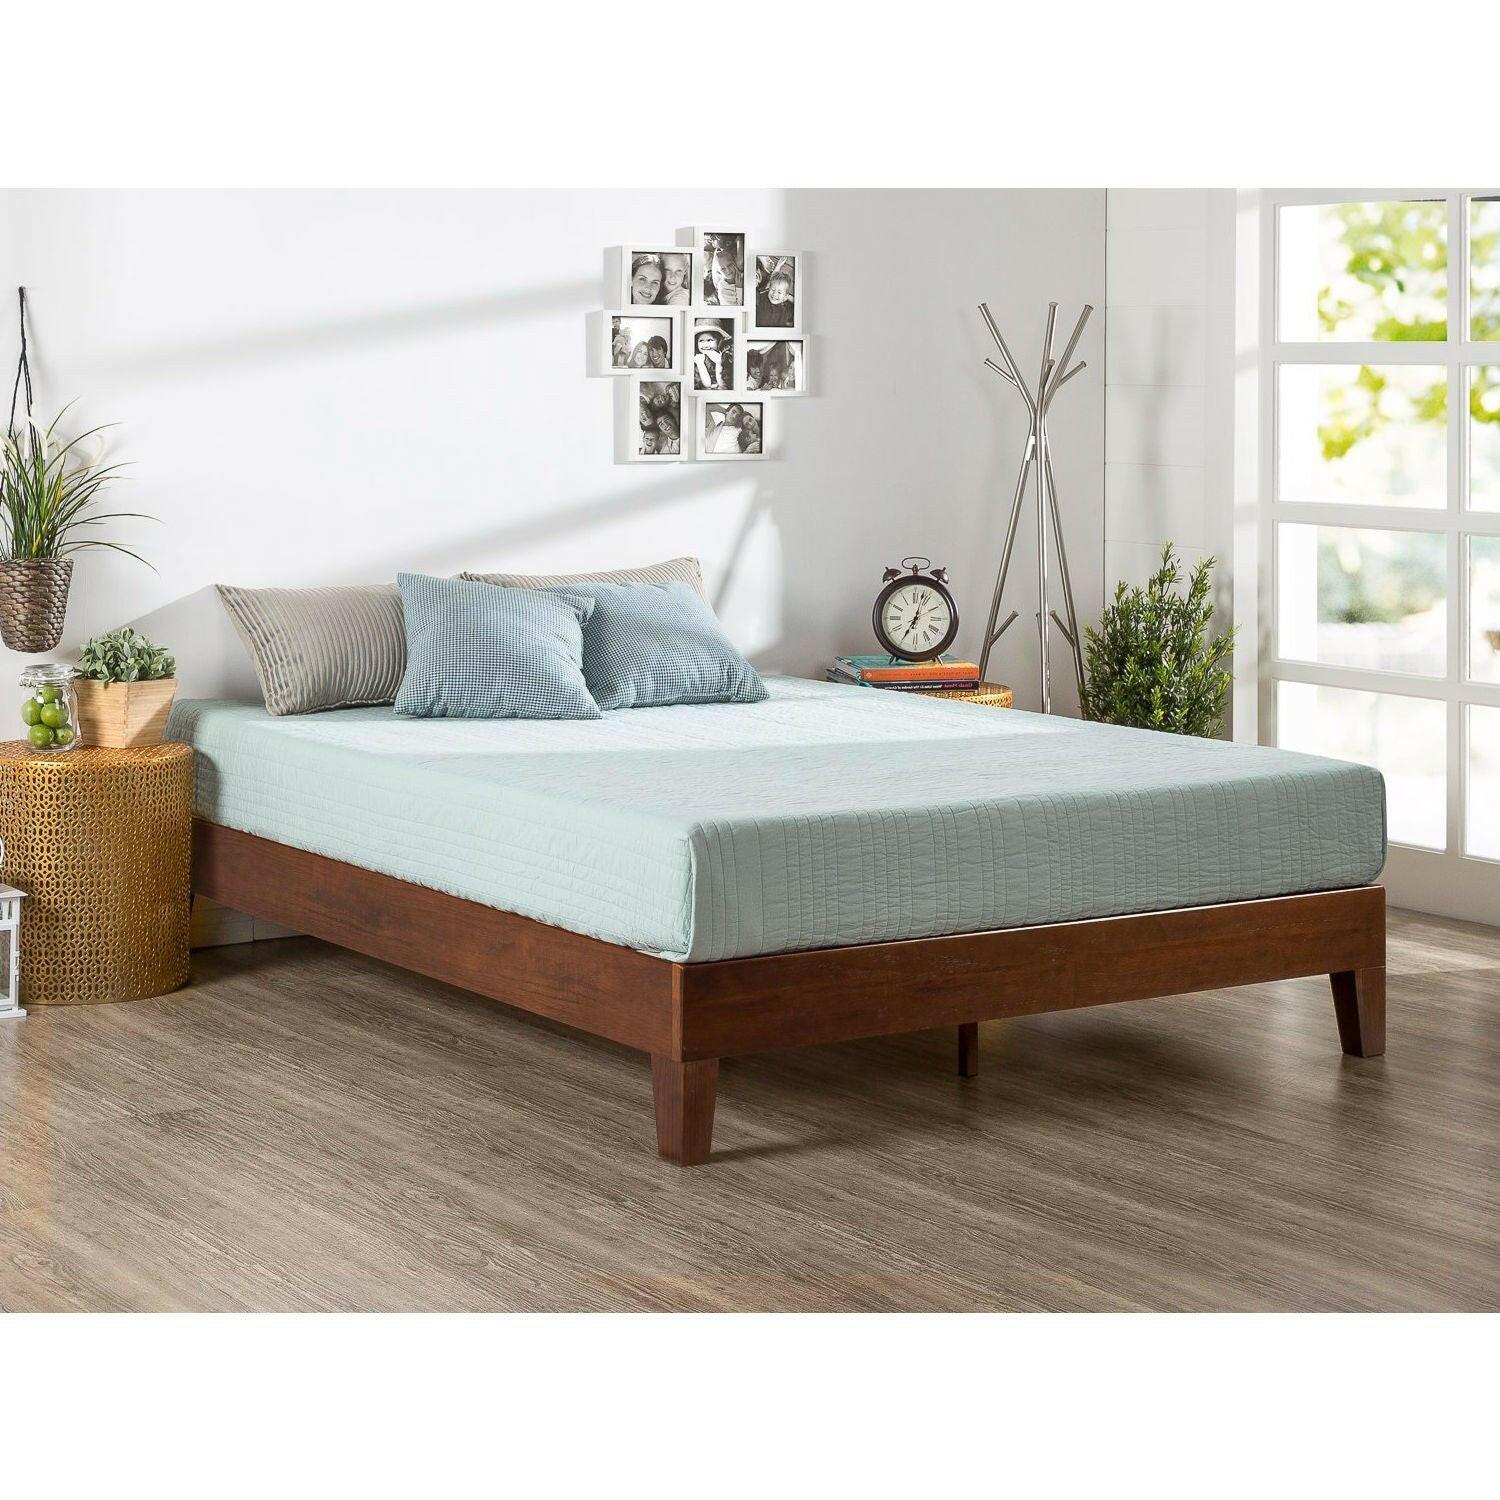 King size Low Profile Solid Wood Platform Bed Frame in Espresso Finish - FurniFindUSA